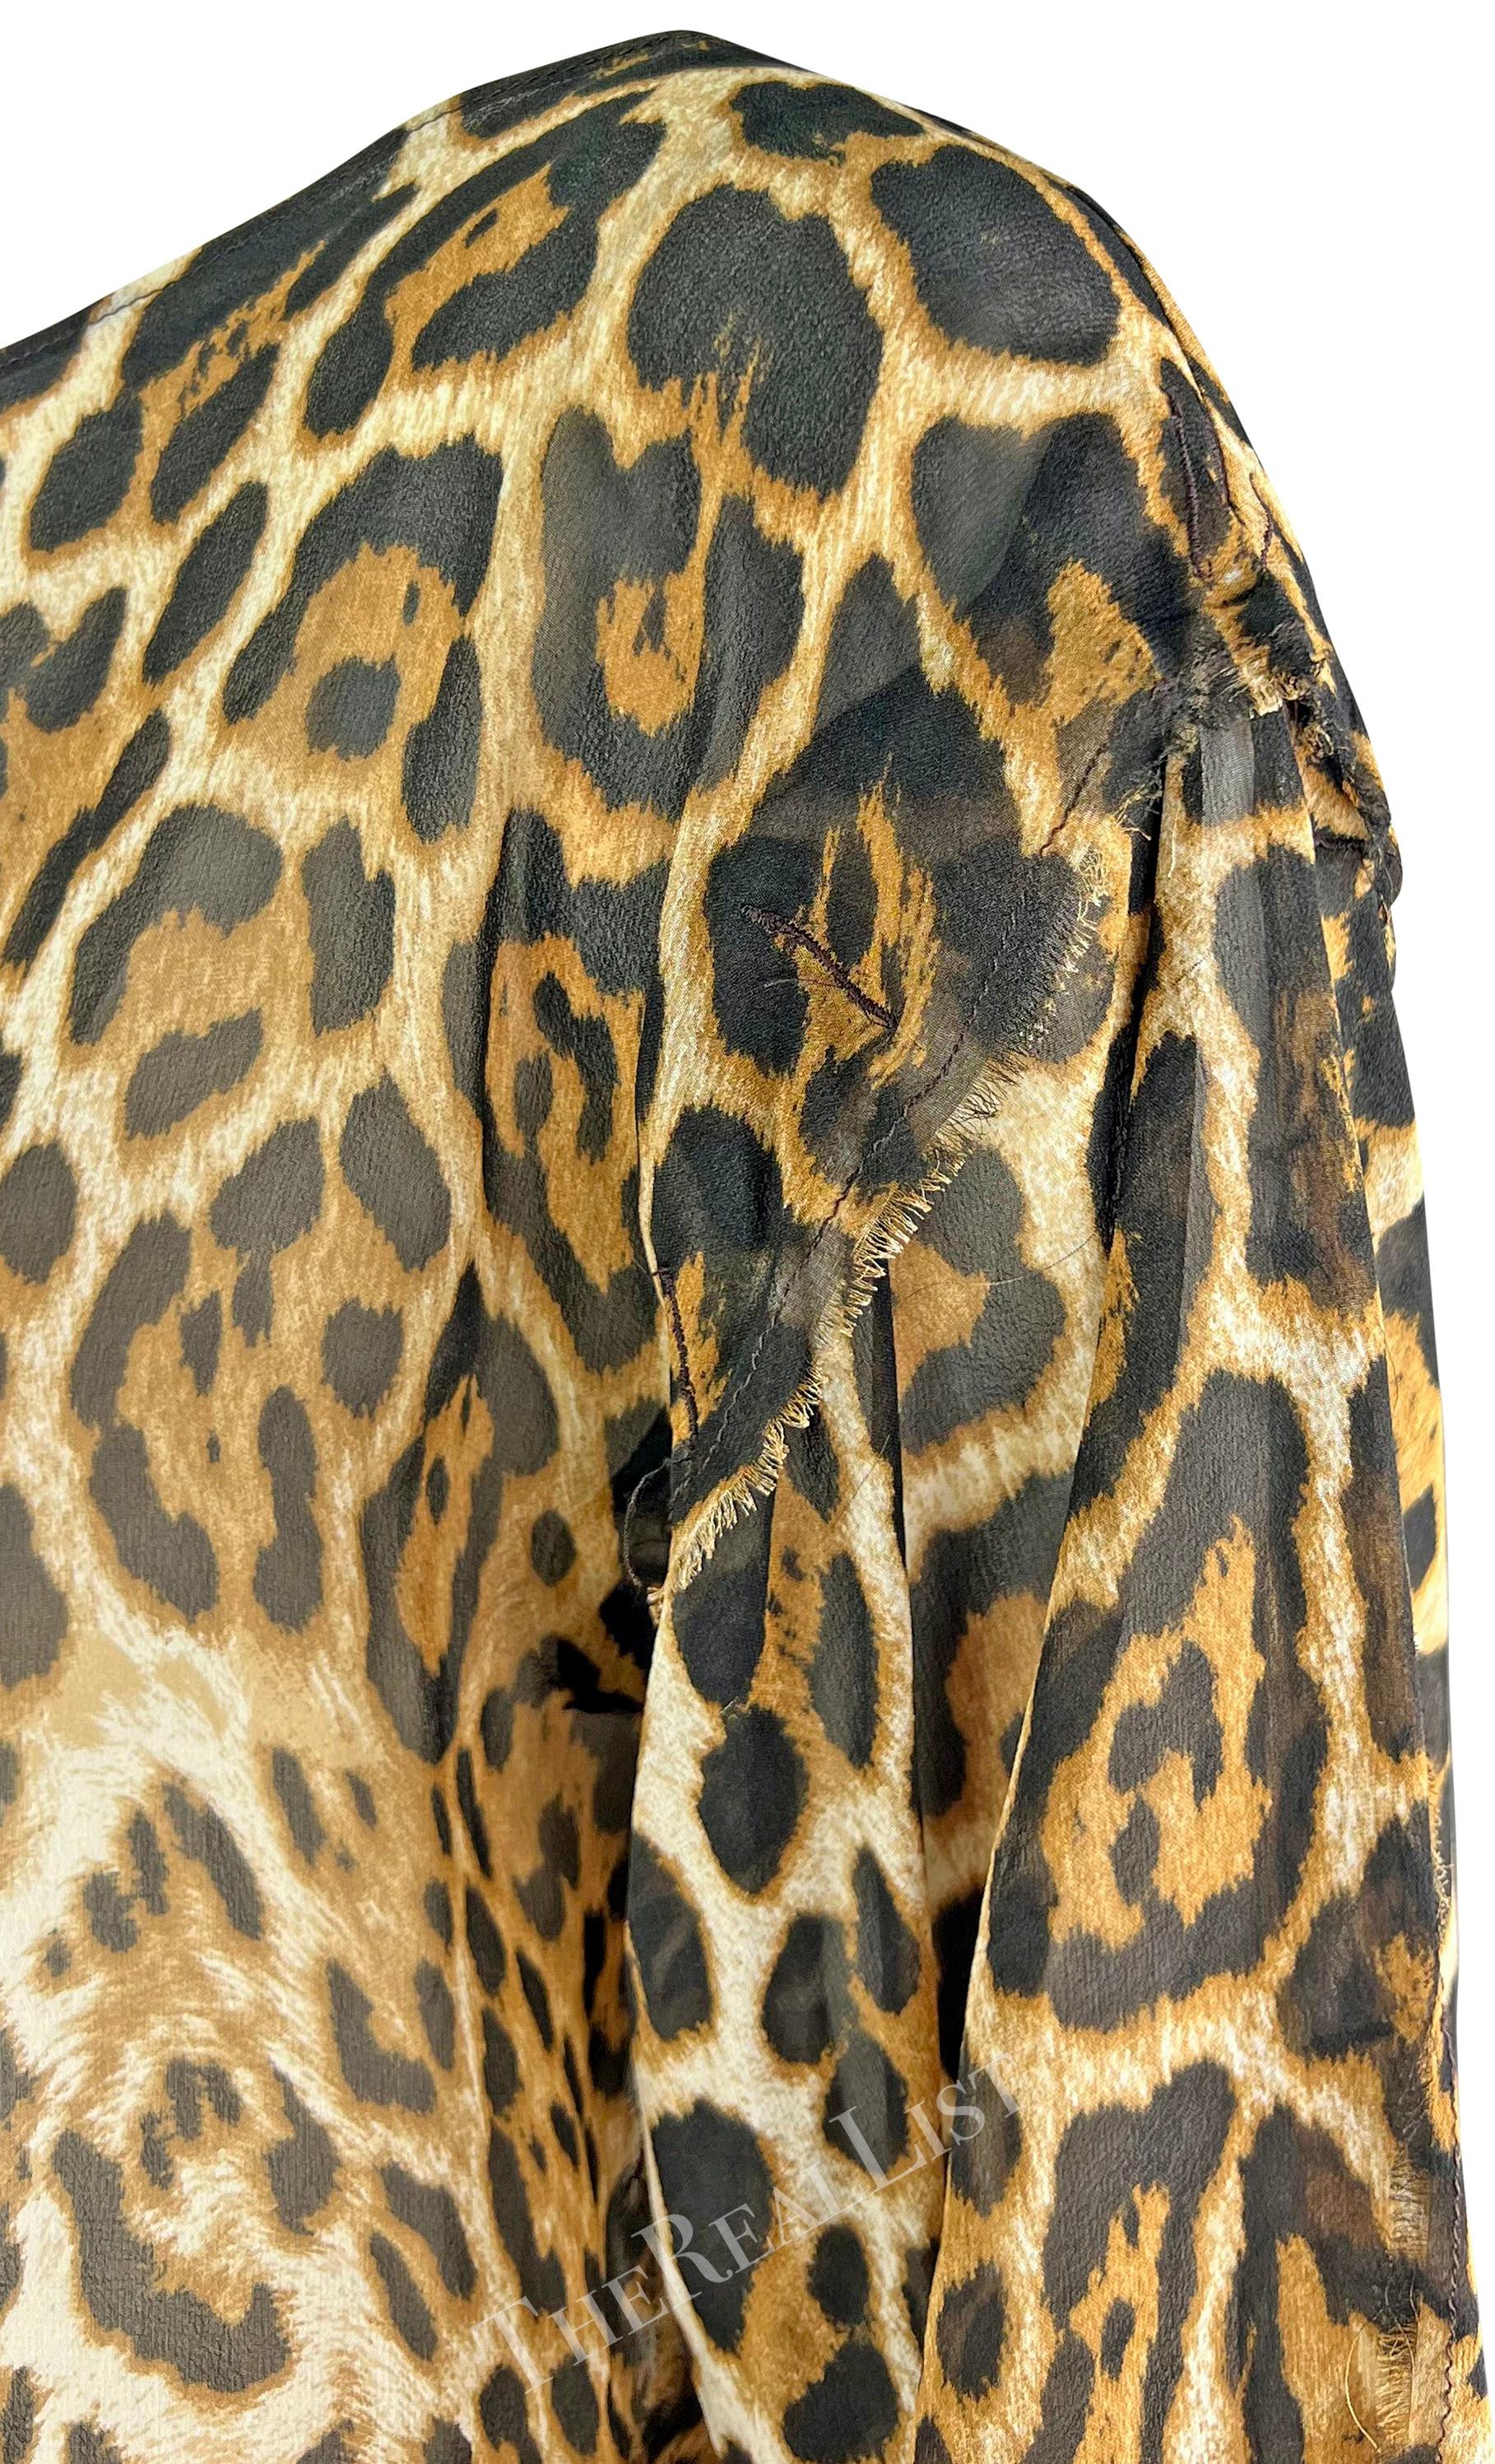 S/S 2002 Yves Saint Laurent by Tom Ford Safari Cheetah Print Sheer Silk Top For Sale 7